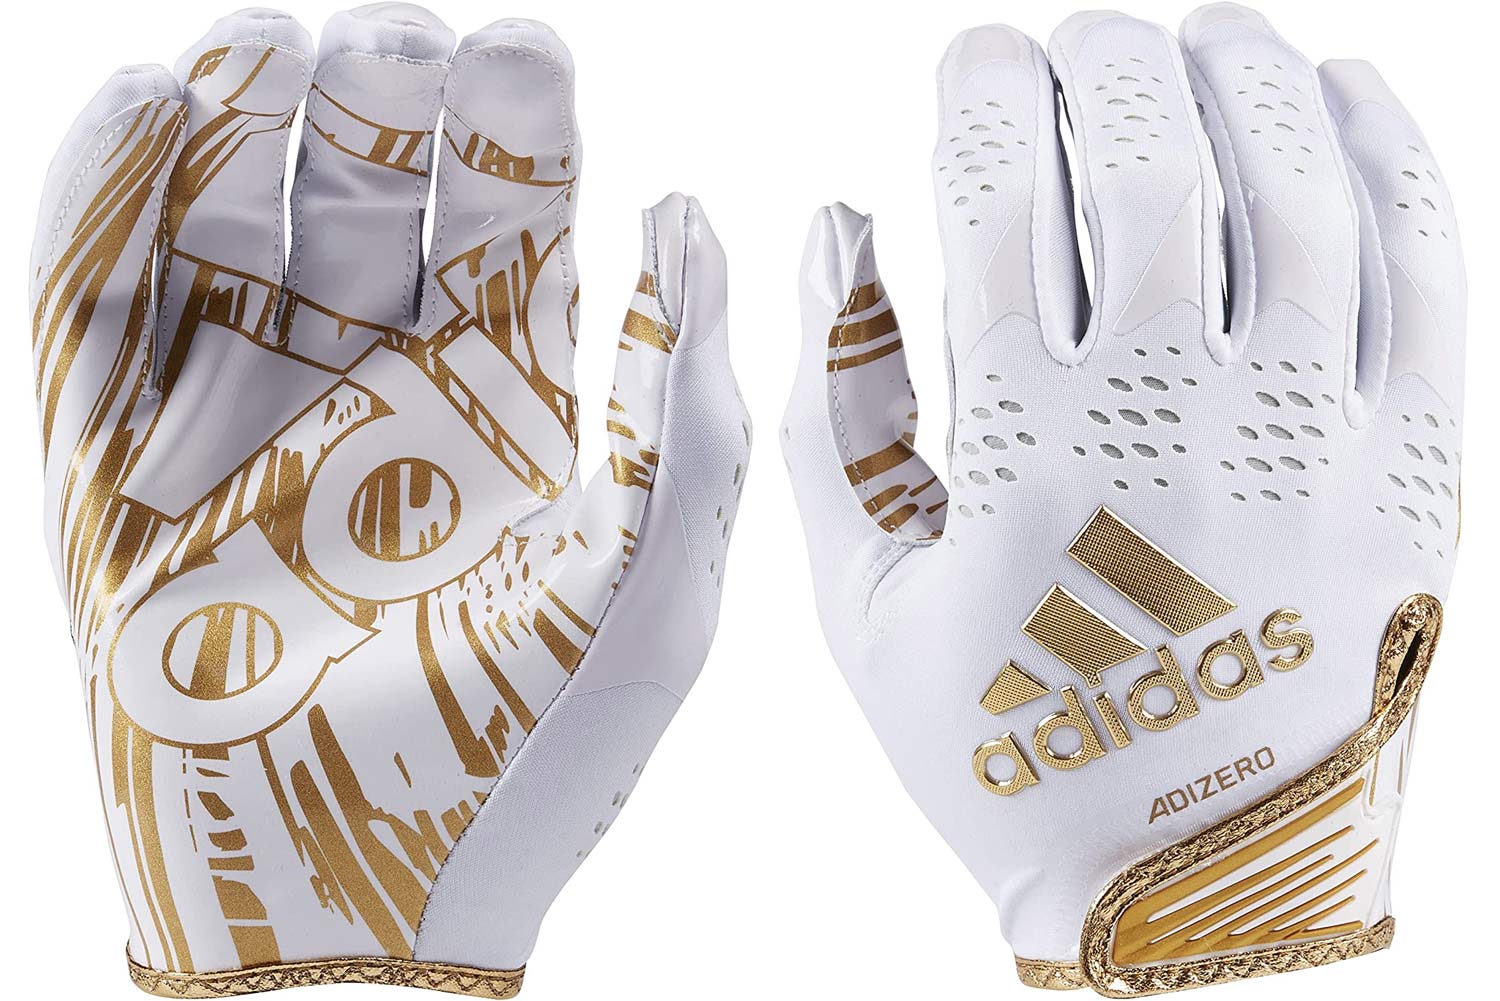 Adidas Adizero 12 Adult Football Receiver Gloves, New | eBay